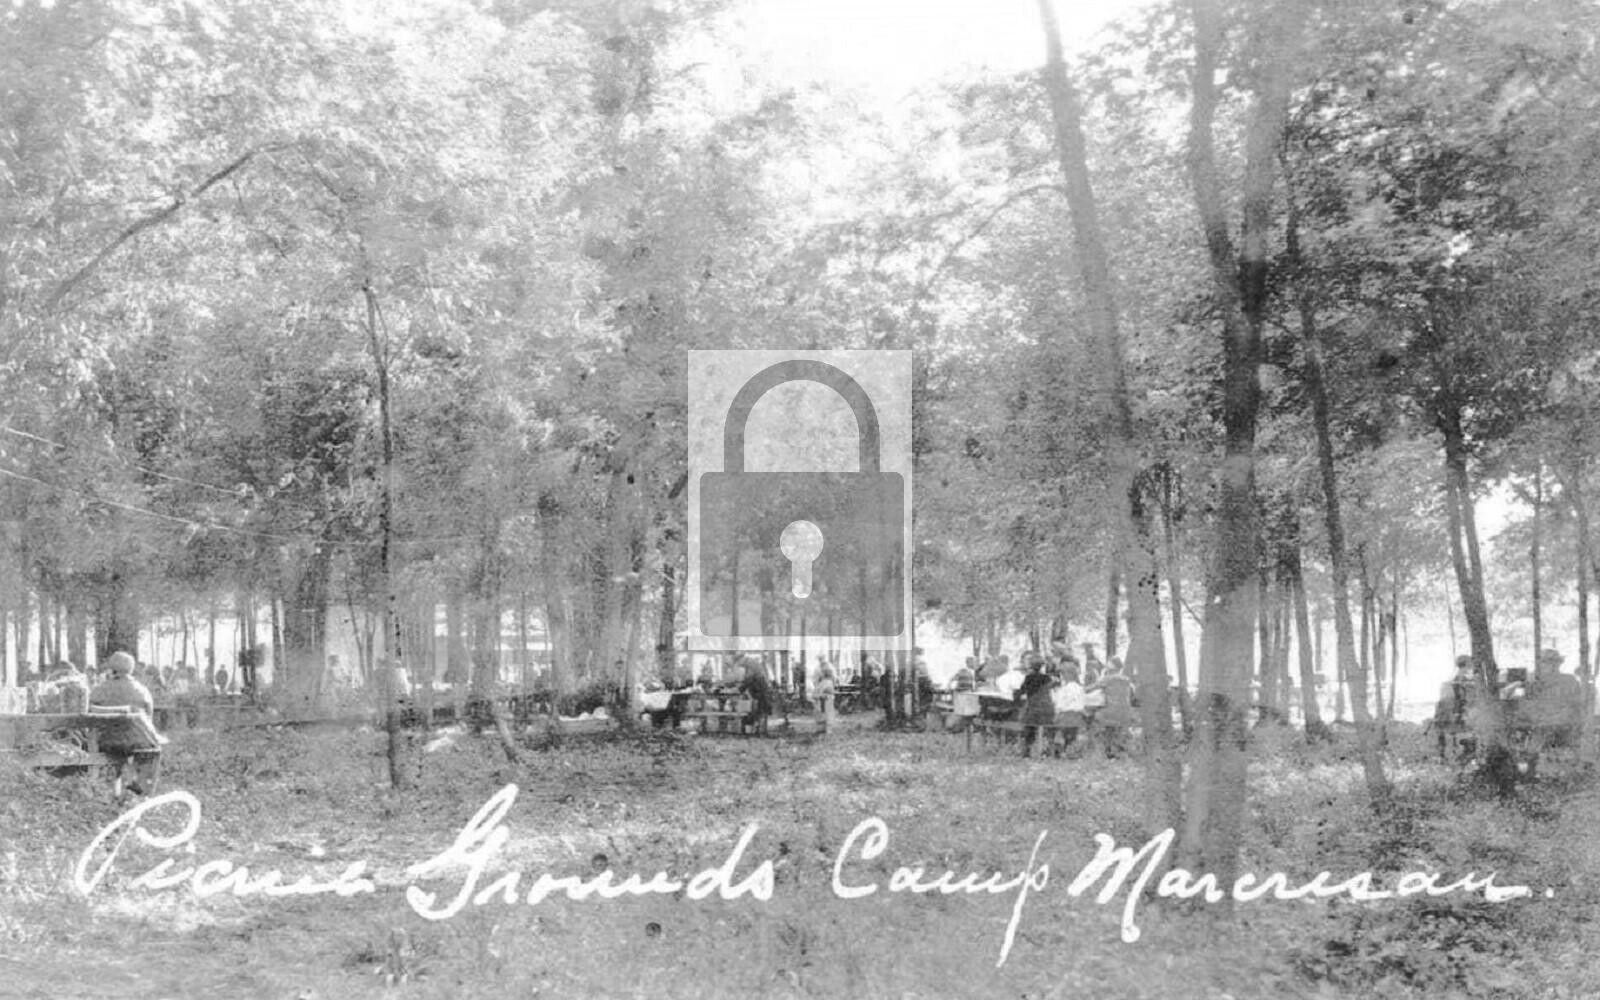 Picnic Grounds Camp Marcresan Union City Pennsylvania PA Reprint Postcard